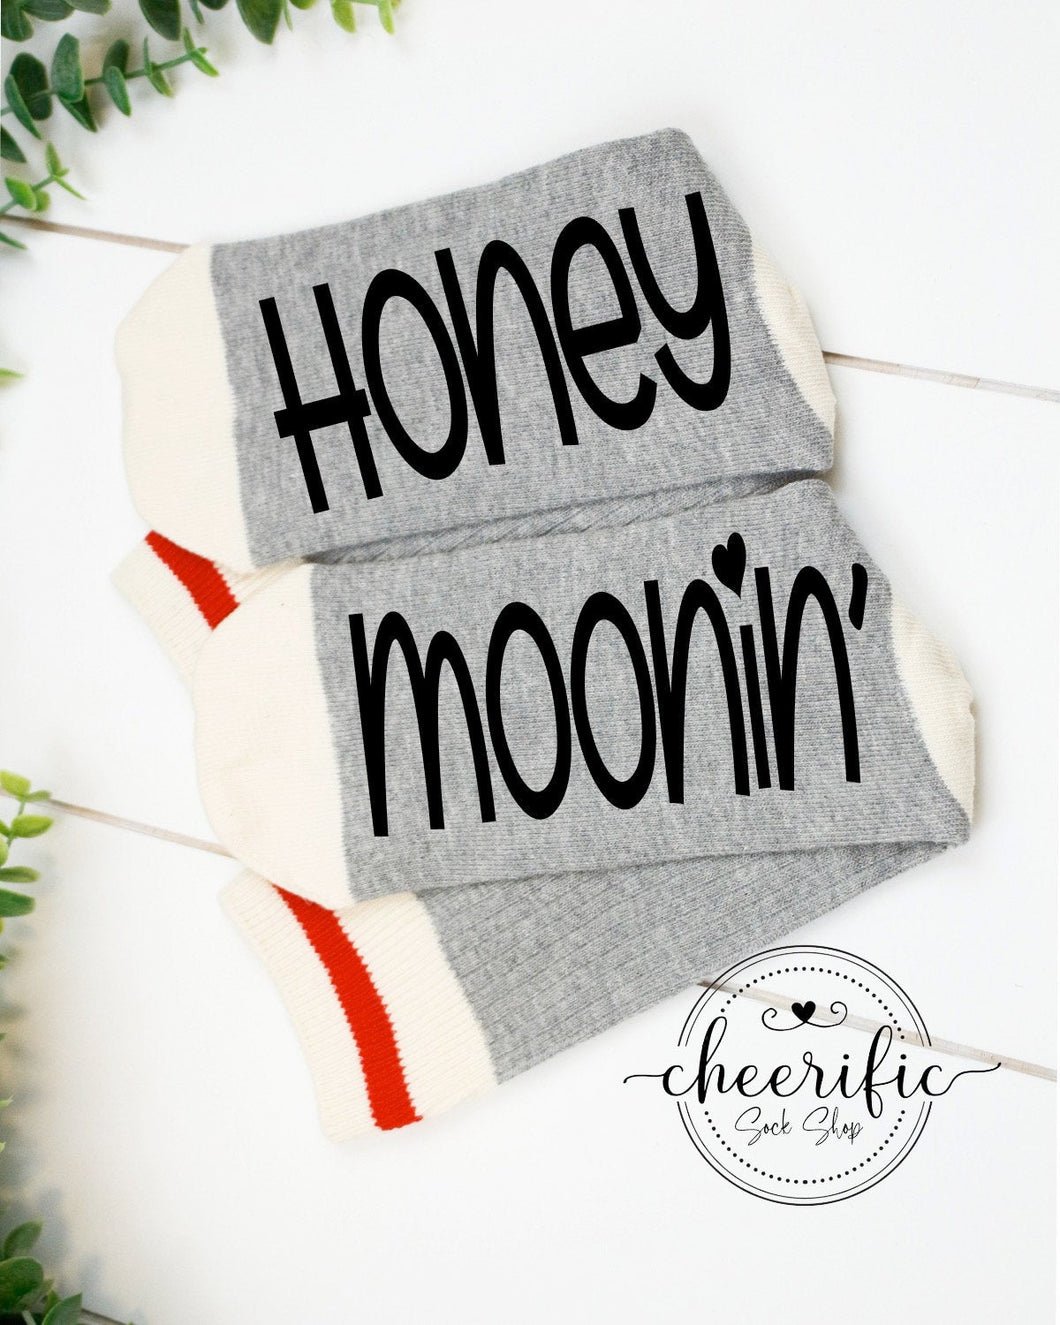 Honeymoon Socks